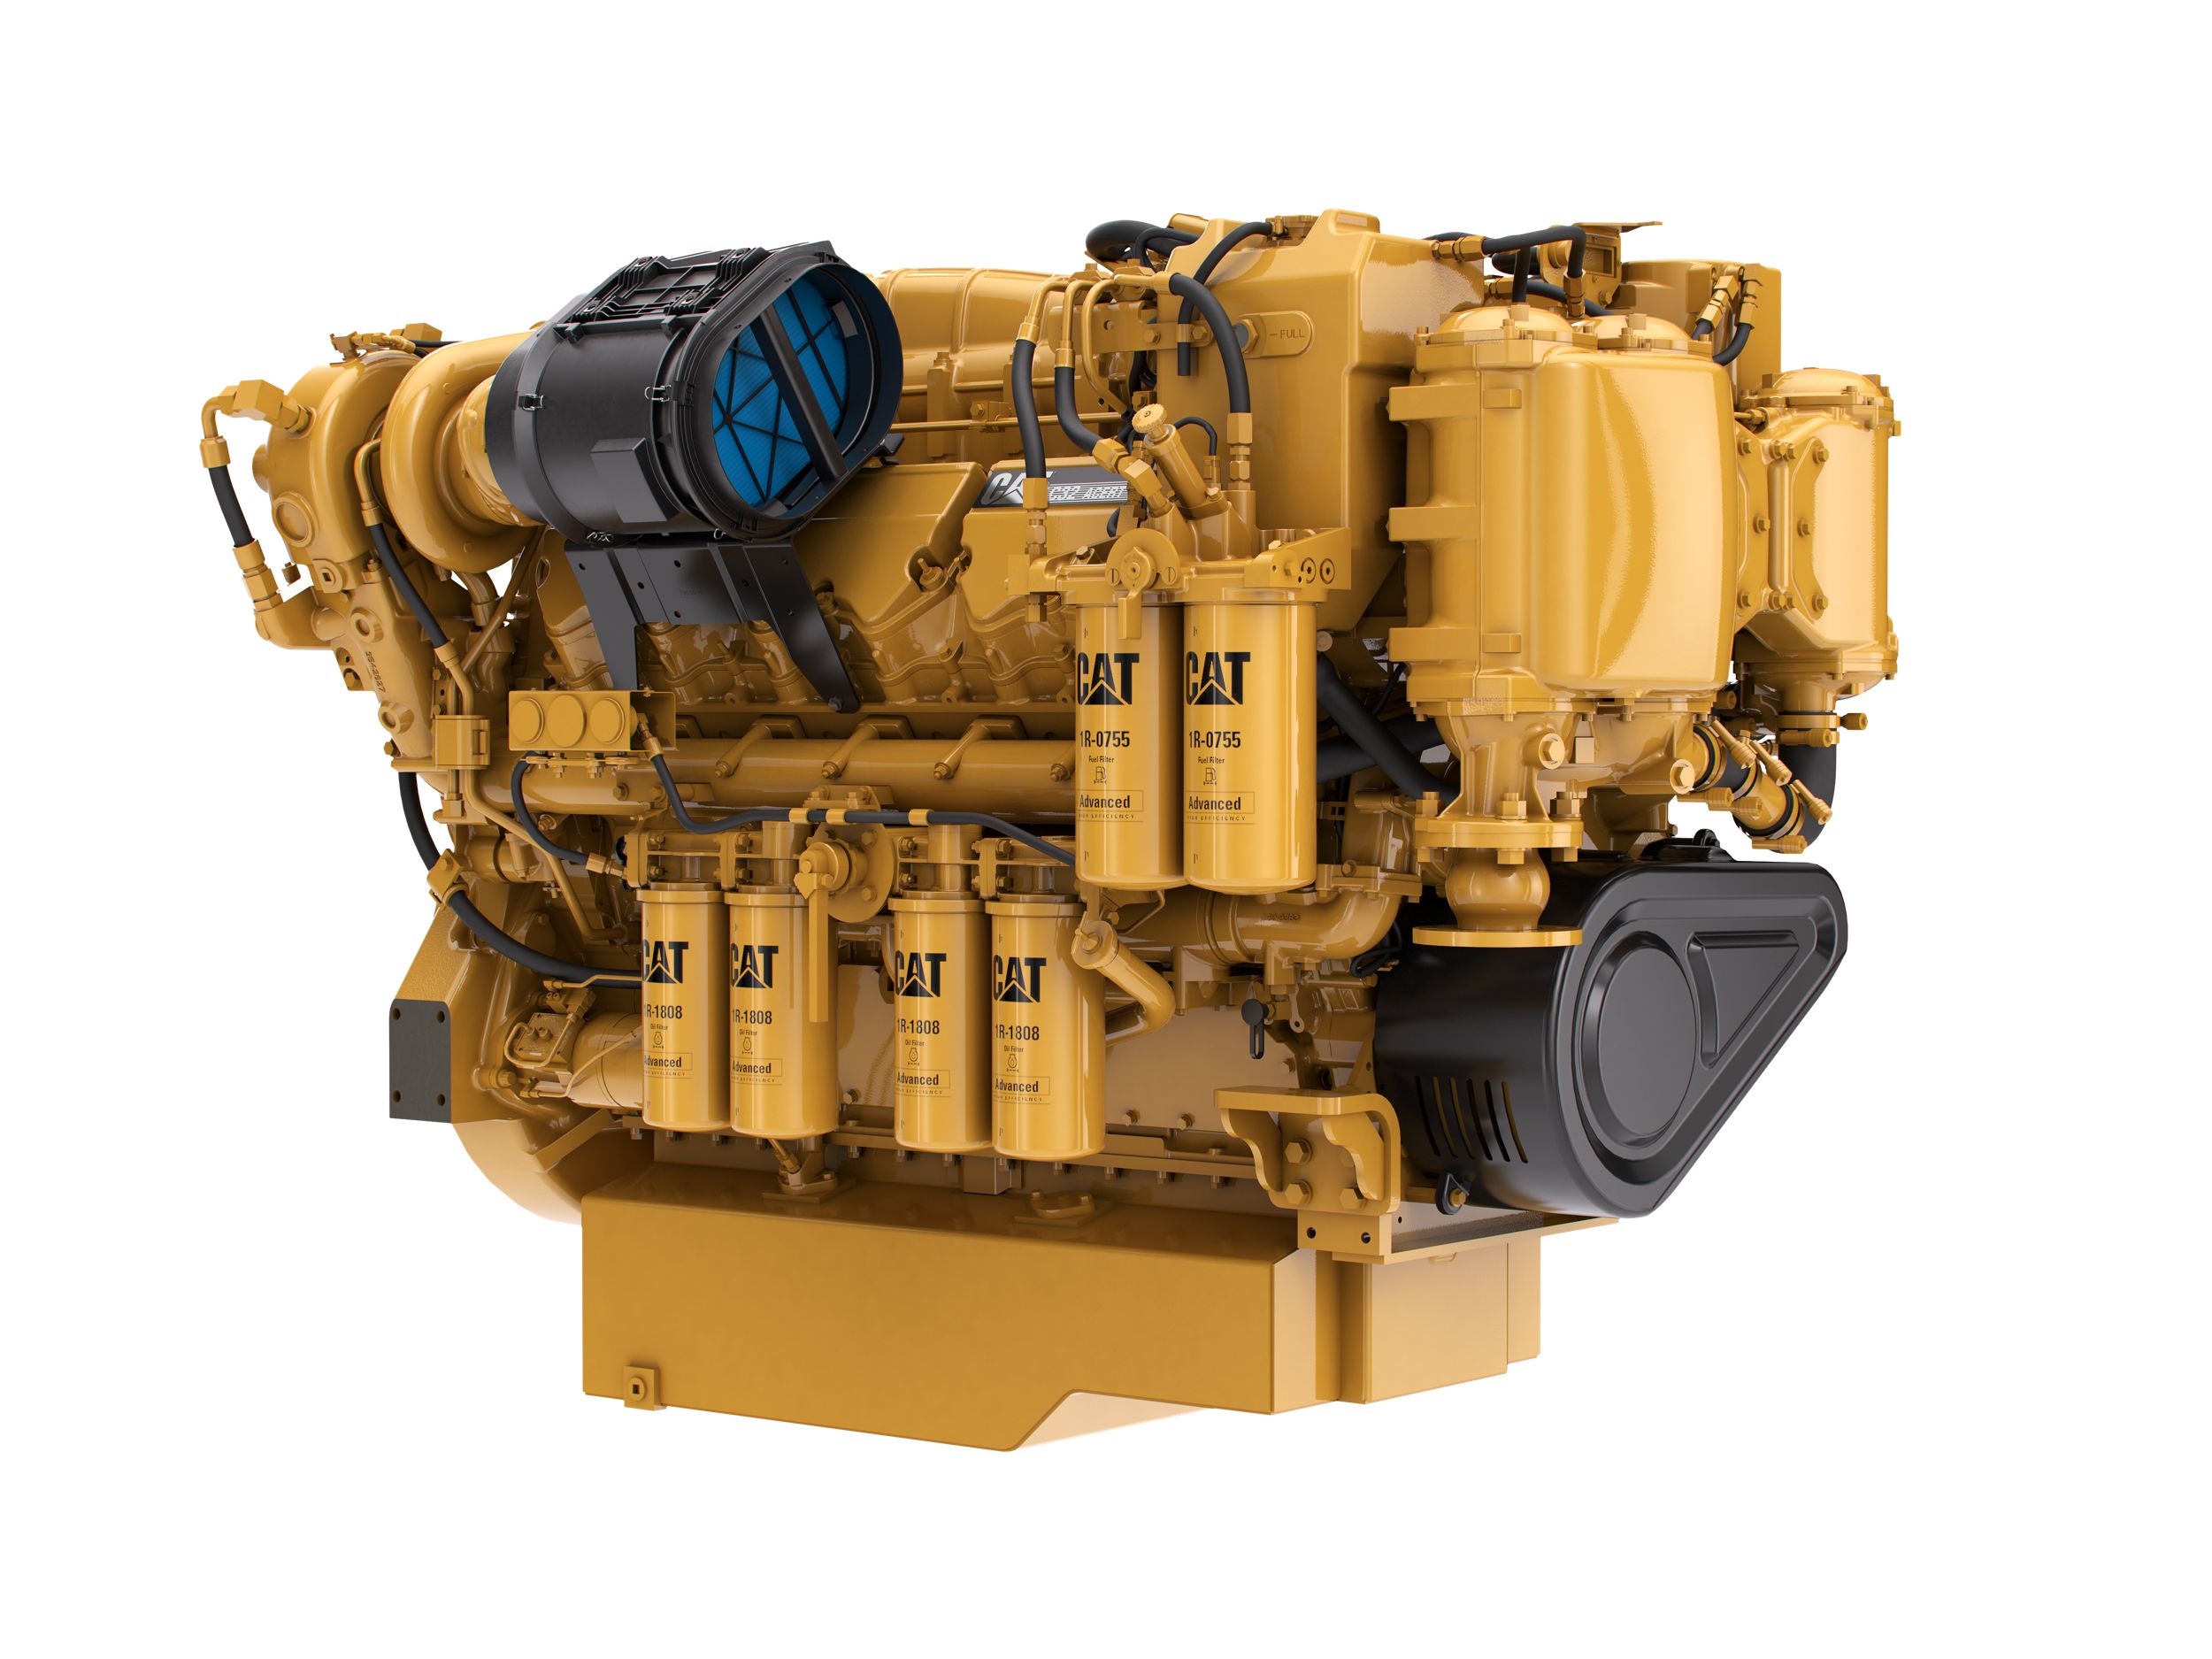 C32 ACERT IMO II   Commercial Propulsion Engines>